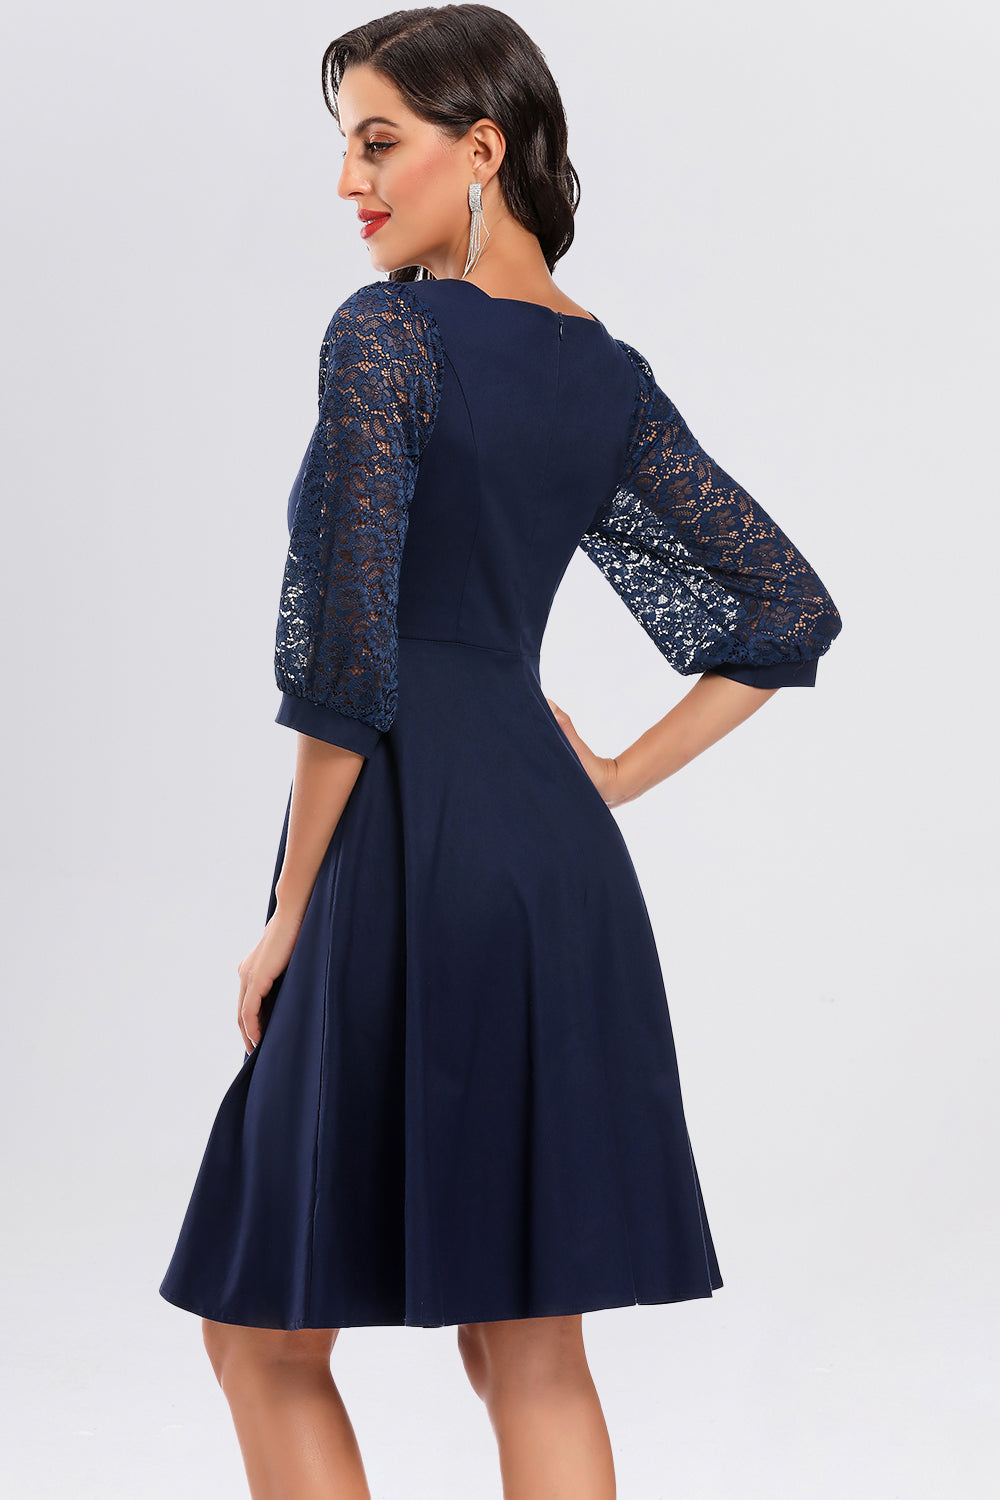 3/4 Latern Sleeve Lace Satin Vintage Dresses